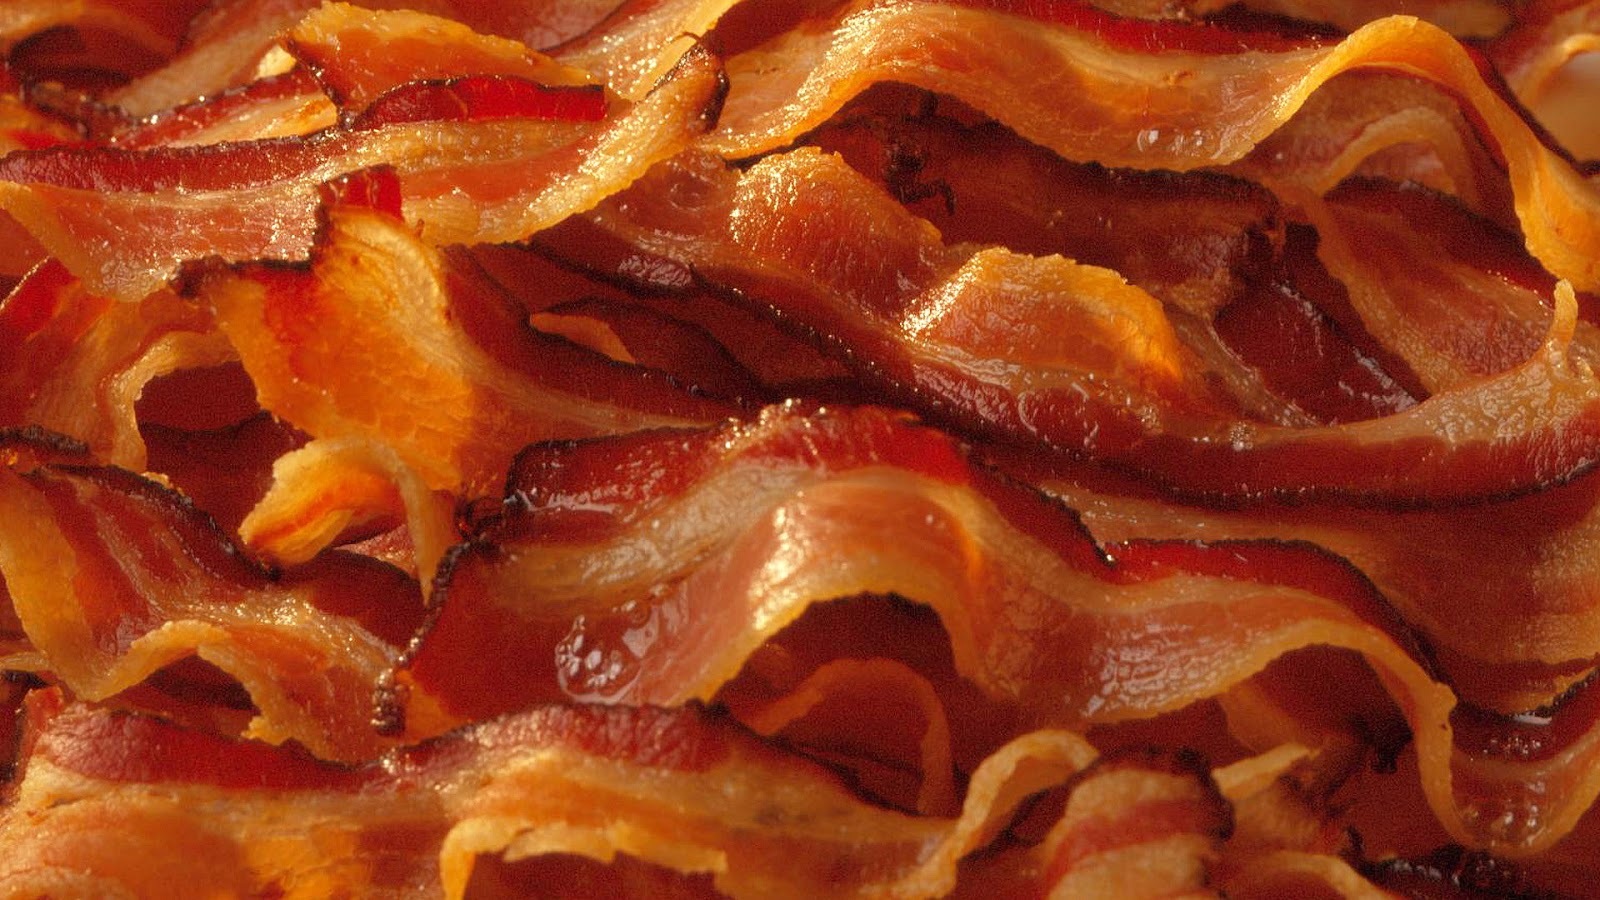 MMMMmmm, Bacon